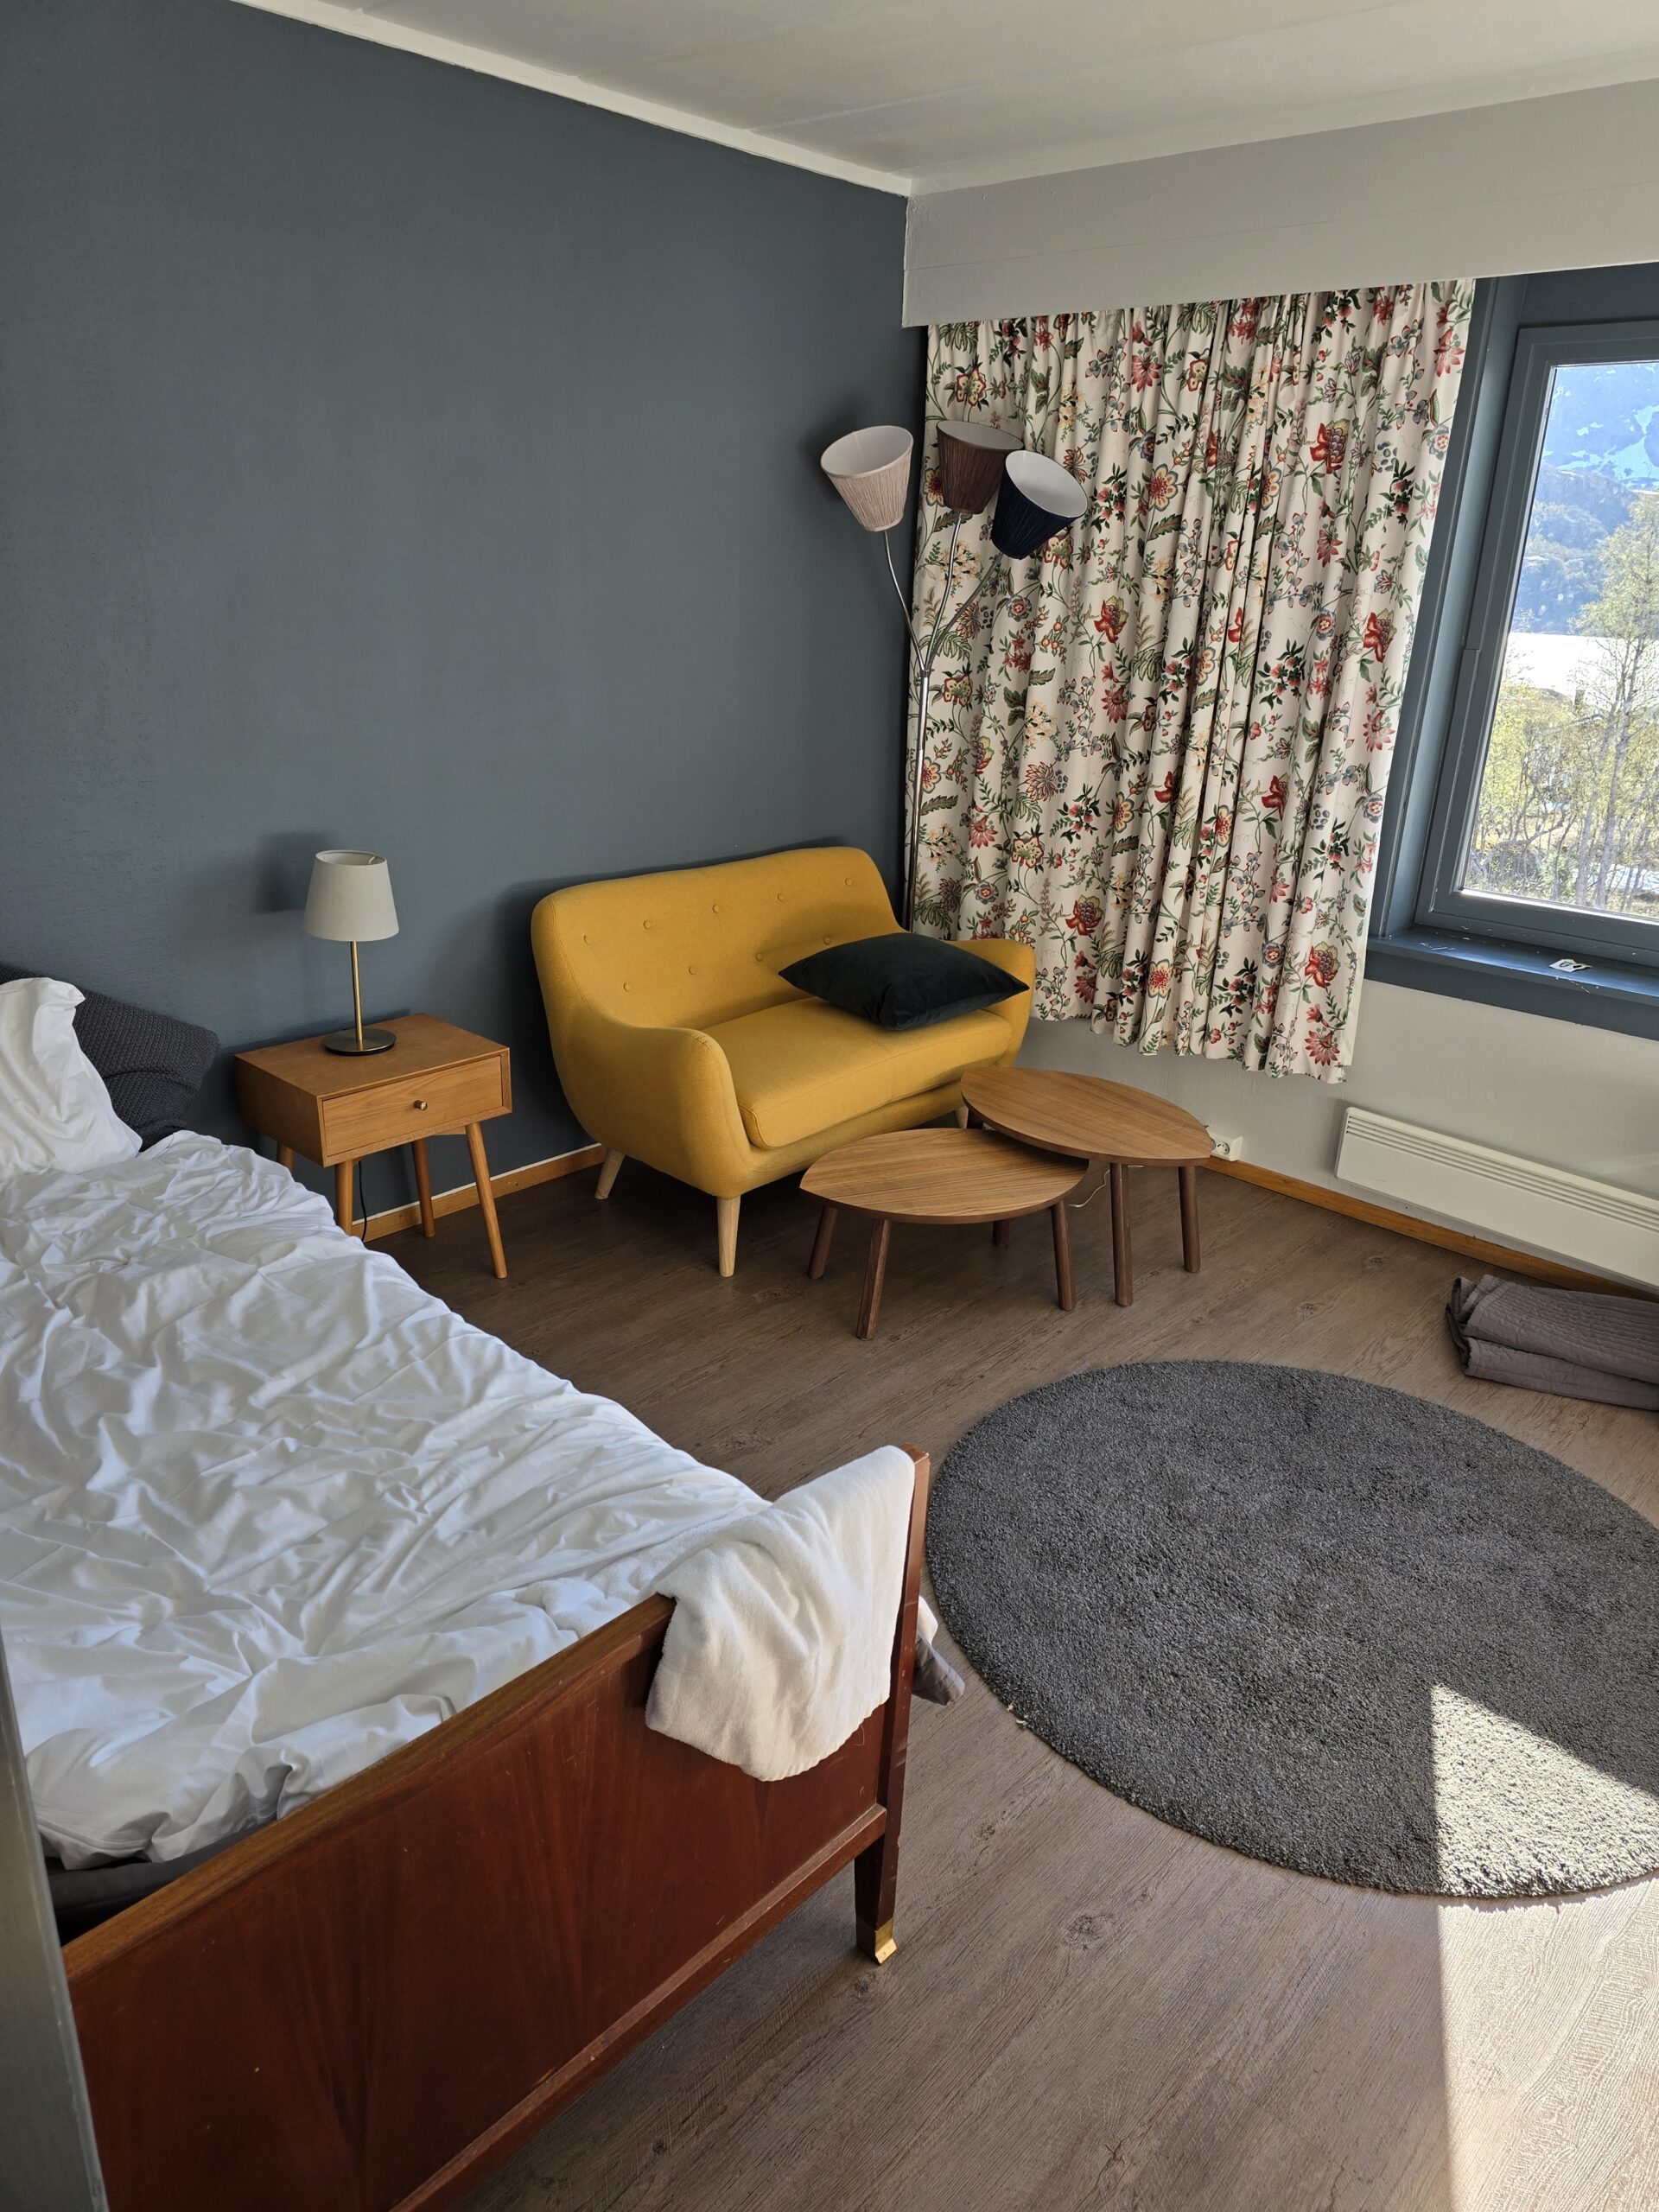 Vatnahalsen Hotel bei Myrdal ©Horst Reitz